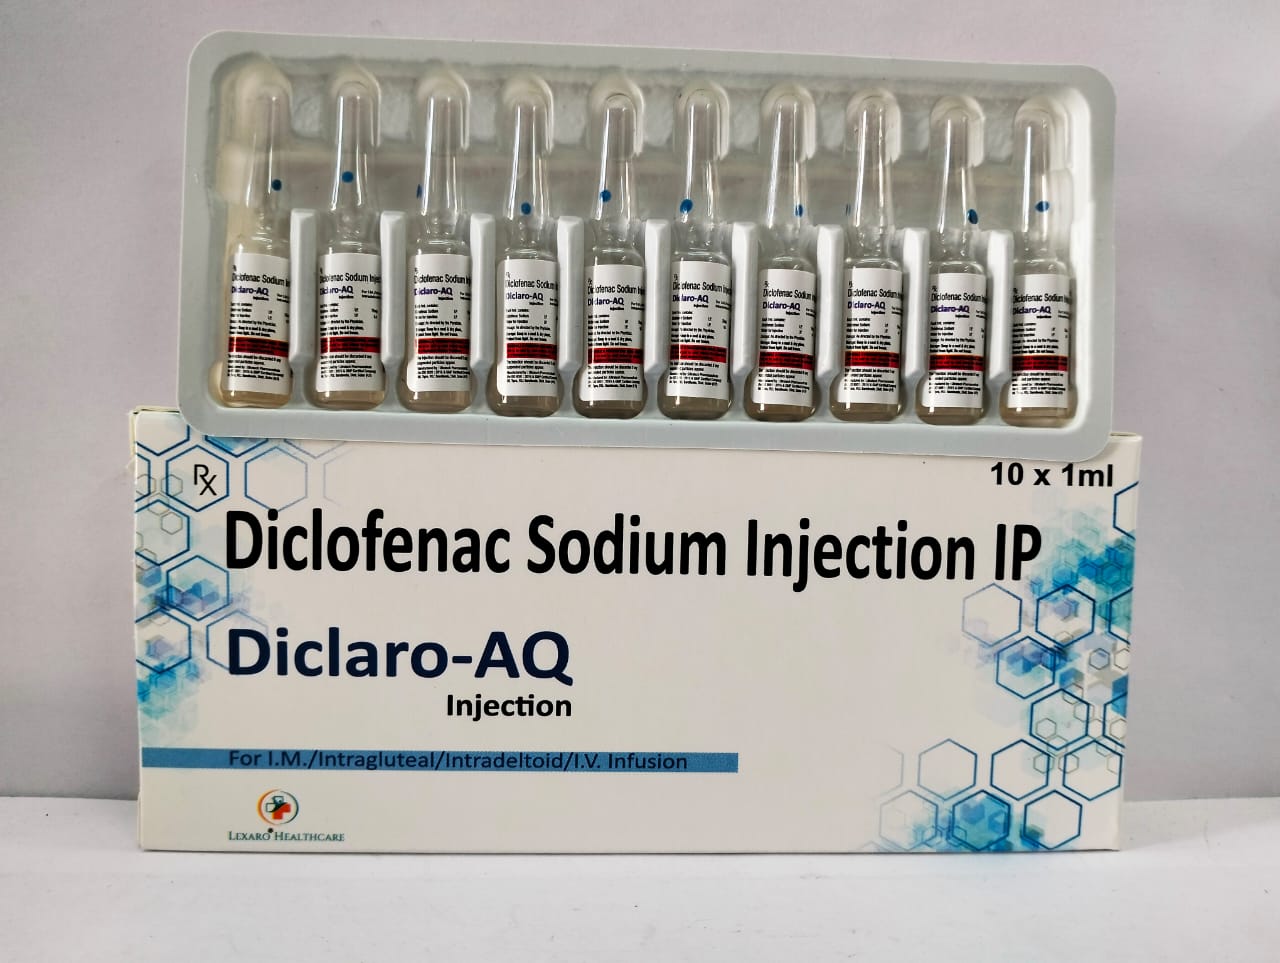 diclofenac sodium injection ip
75mg/ml